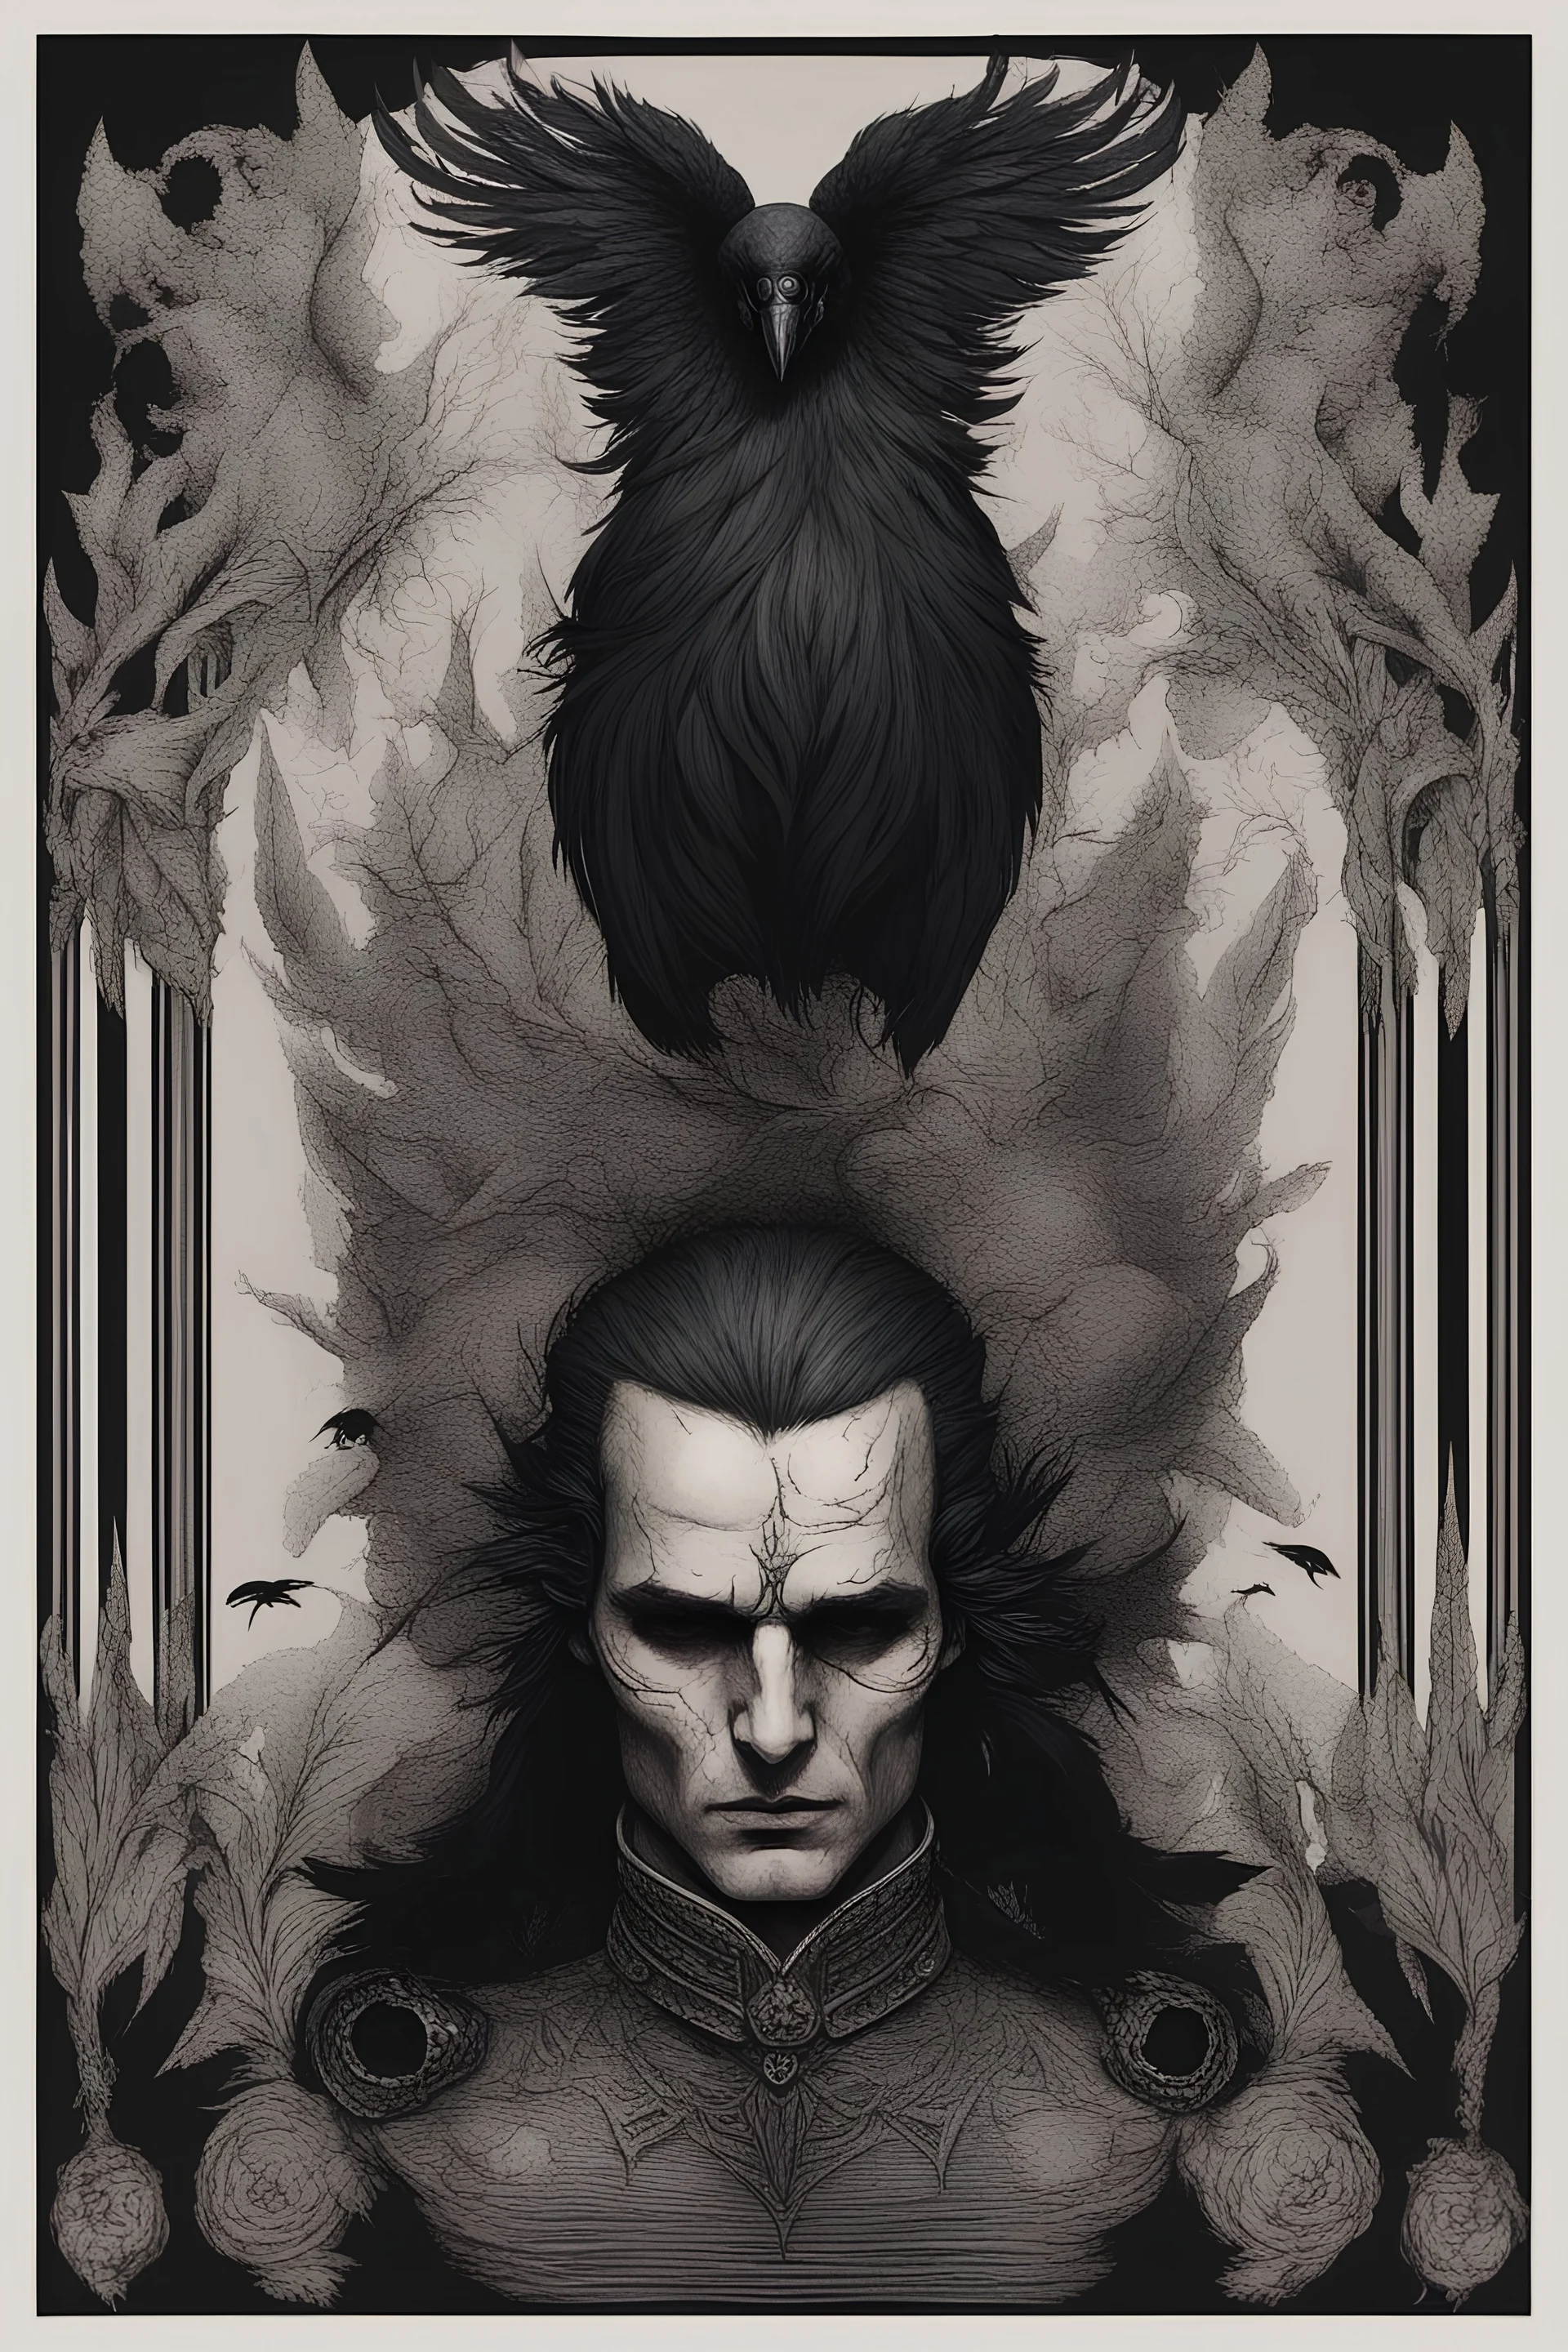 man, necromancer, fantasy, human head with raven feathers